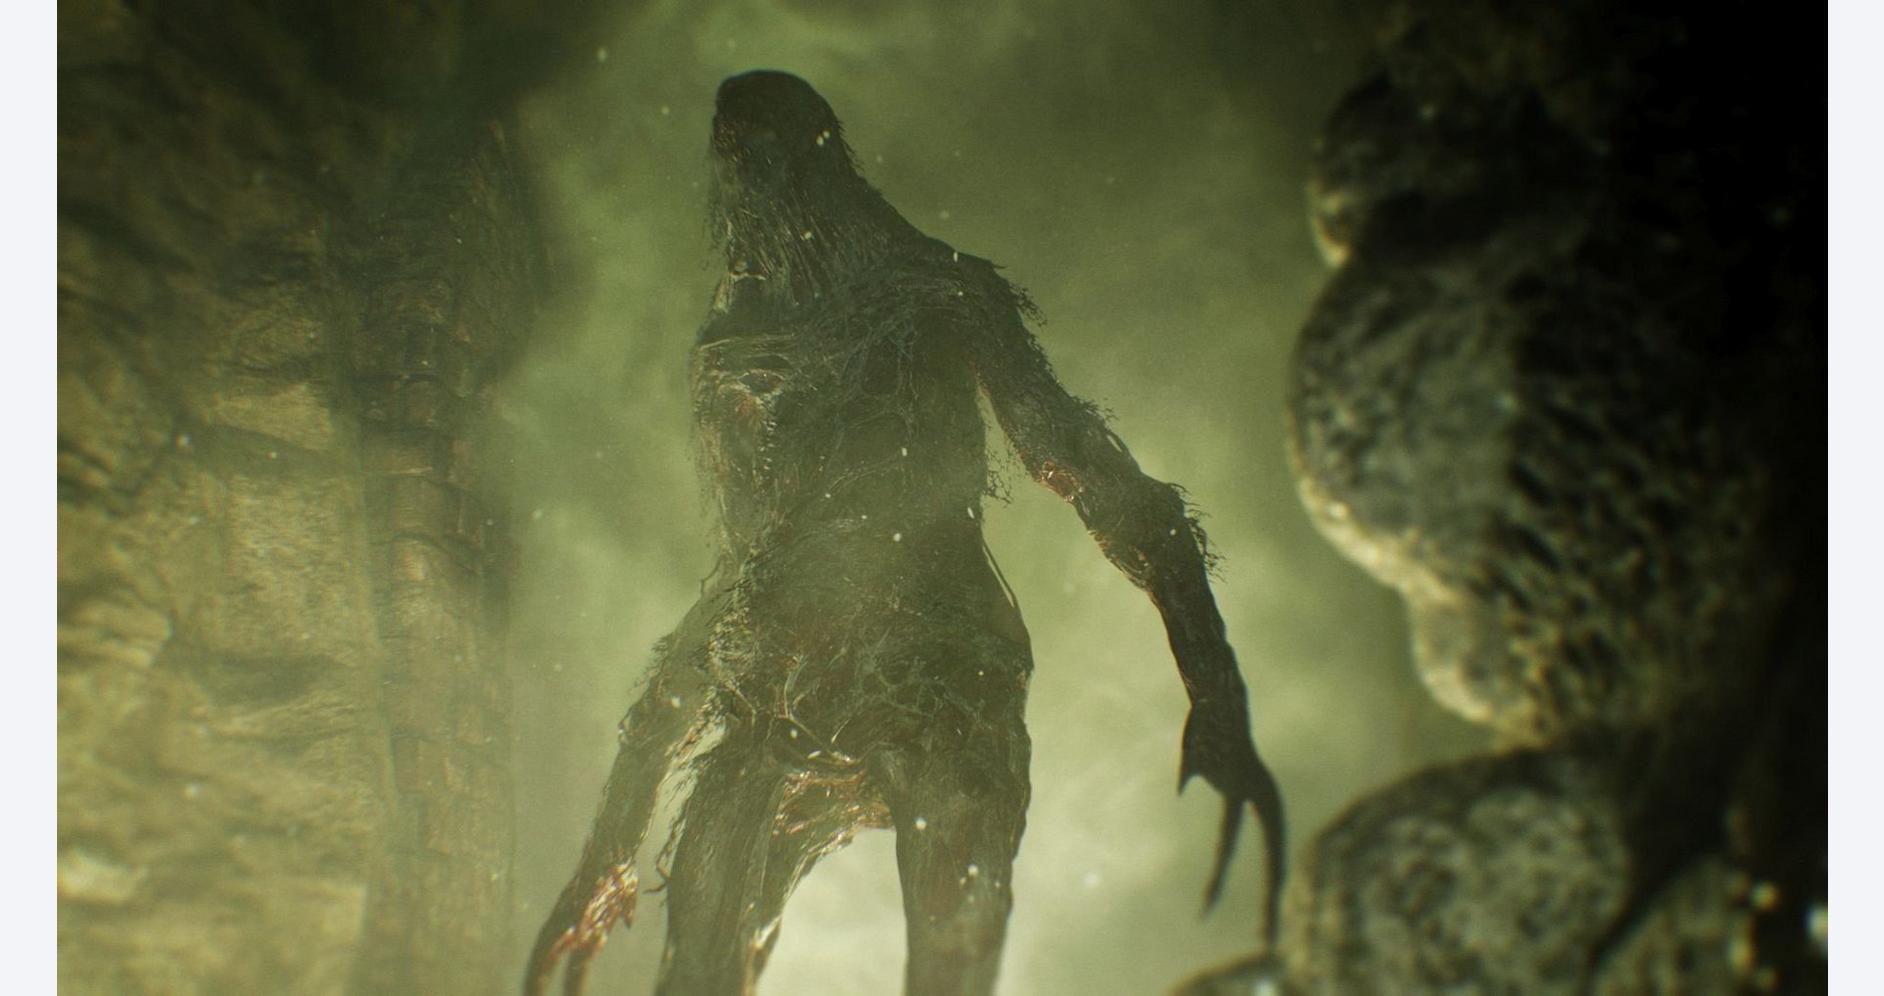 Resident Evil 7 Biohazard - Xbox One Price in Doha, Qatar - Game Shop